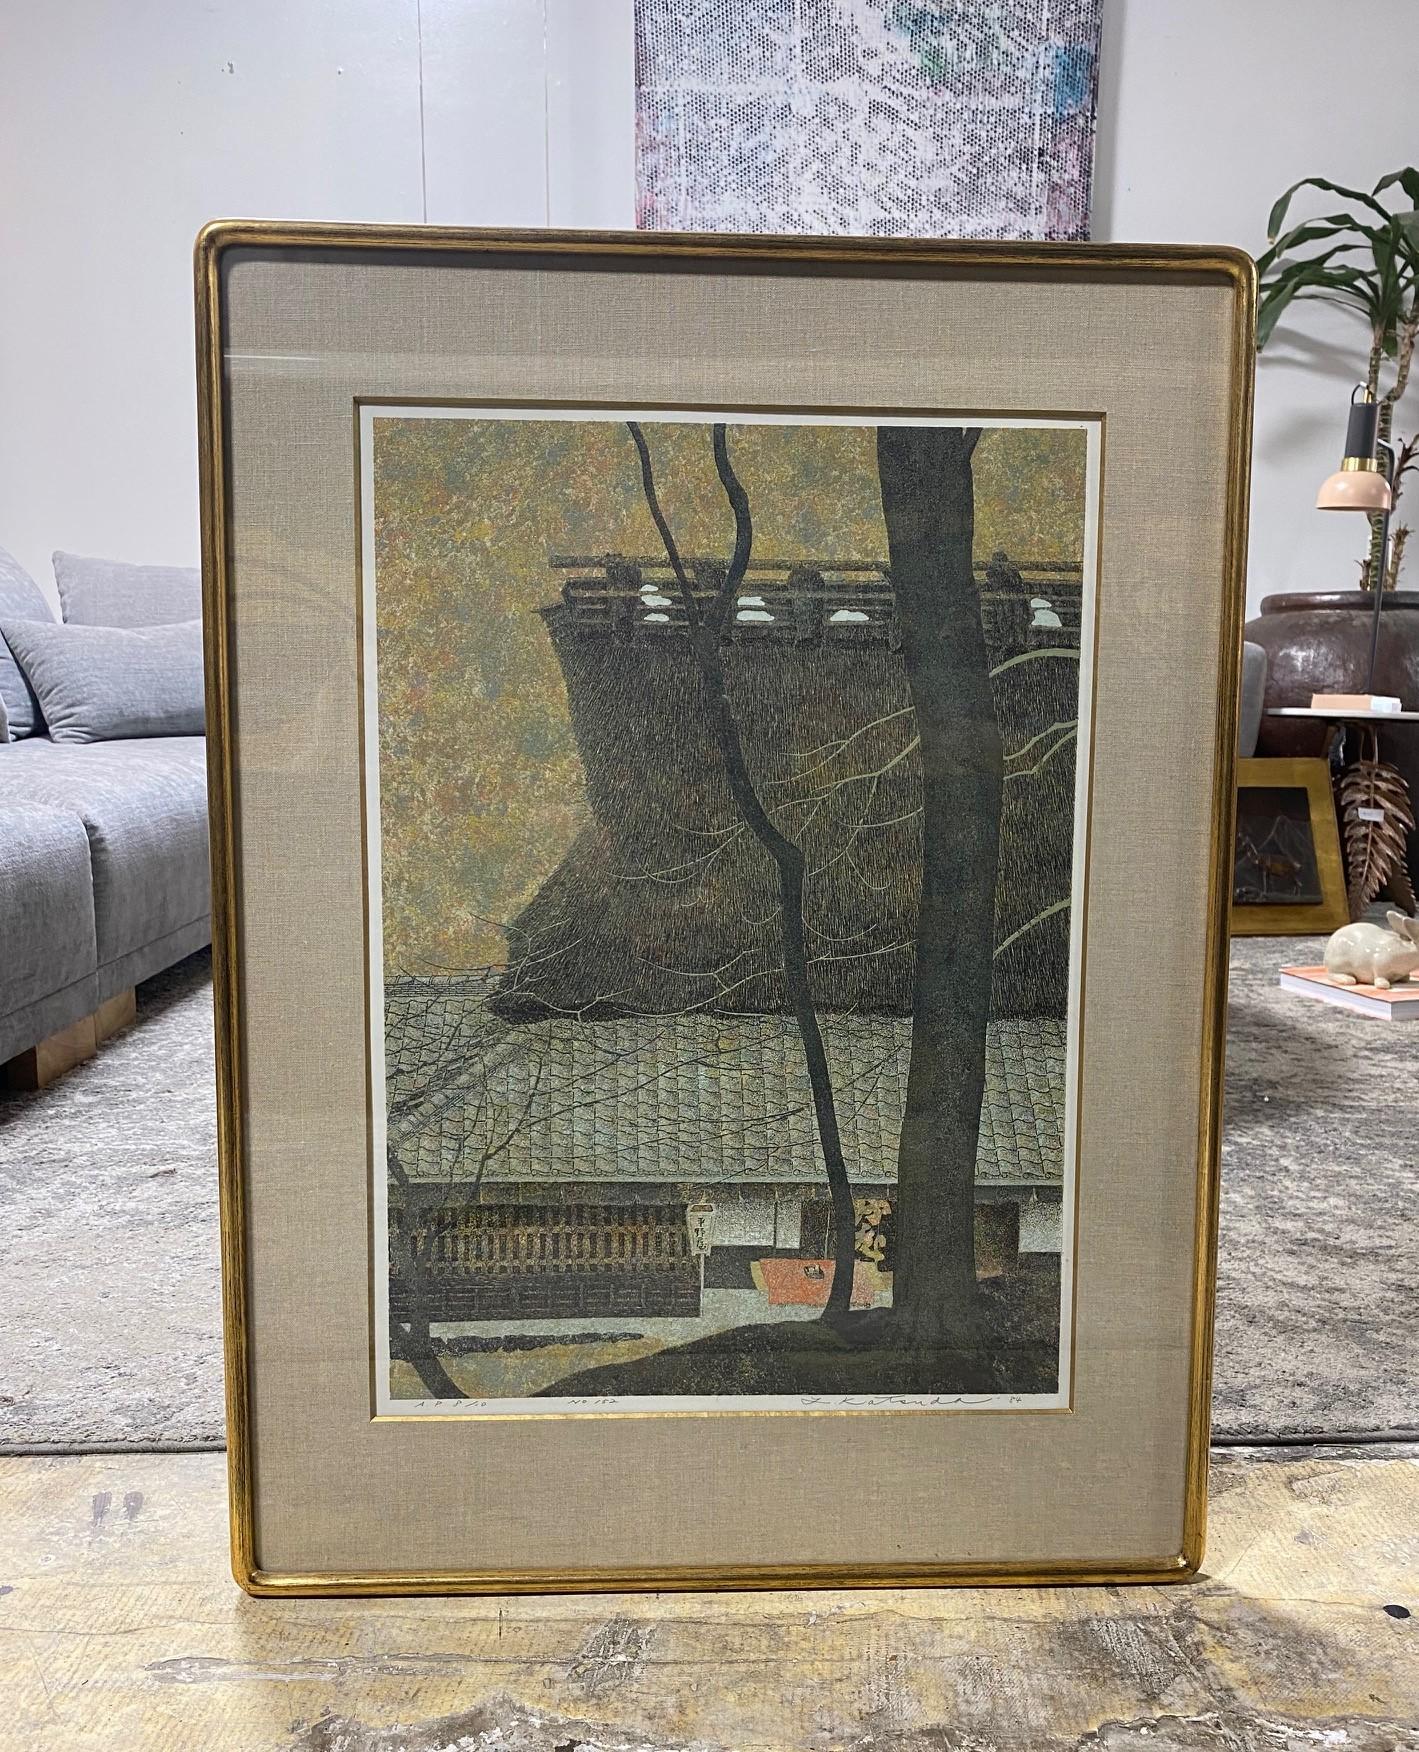 A truly beautiful and engaging work by Japanese Kyoto printmaker artist Yukio Katsuda (1941-) titled 